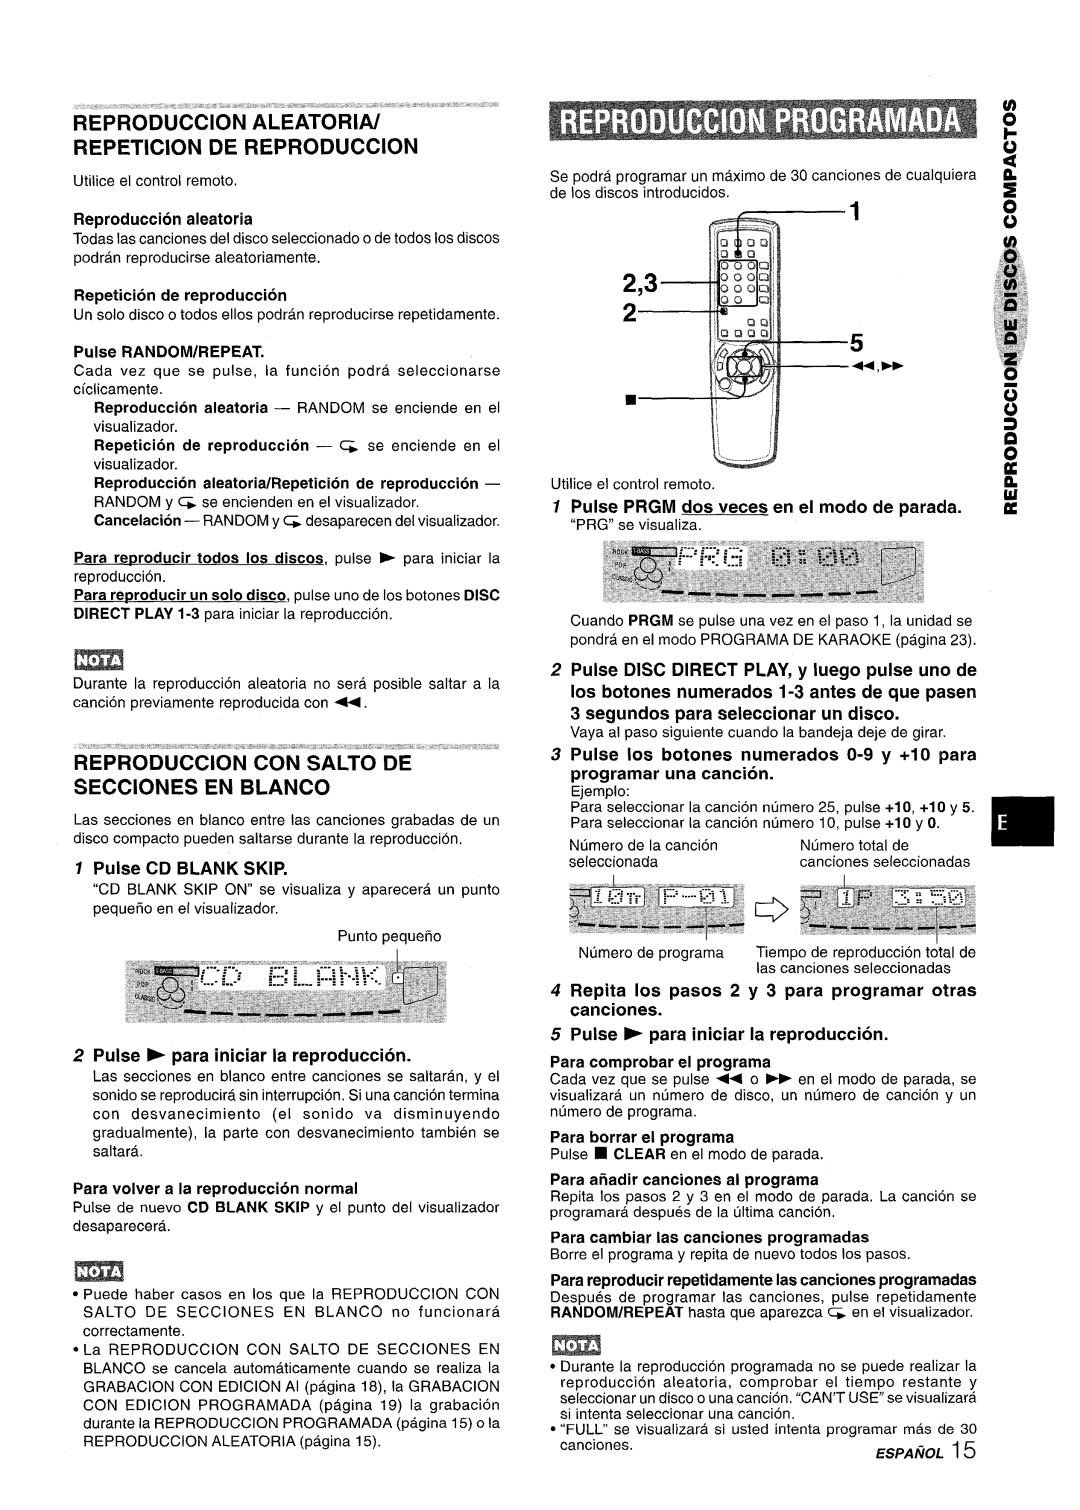 Aiwa SX-WNA555 manual Reproduction Aleatoria/ Repetition De Reproduction, R“Epr”O’Duccion’Lconsalto De Secciones En Blanco 